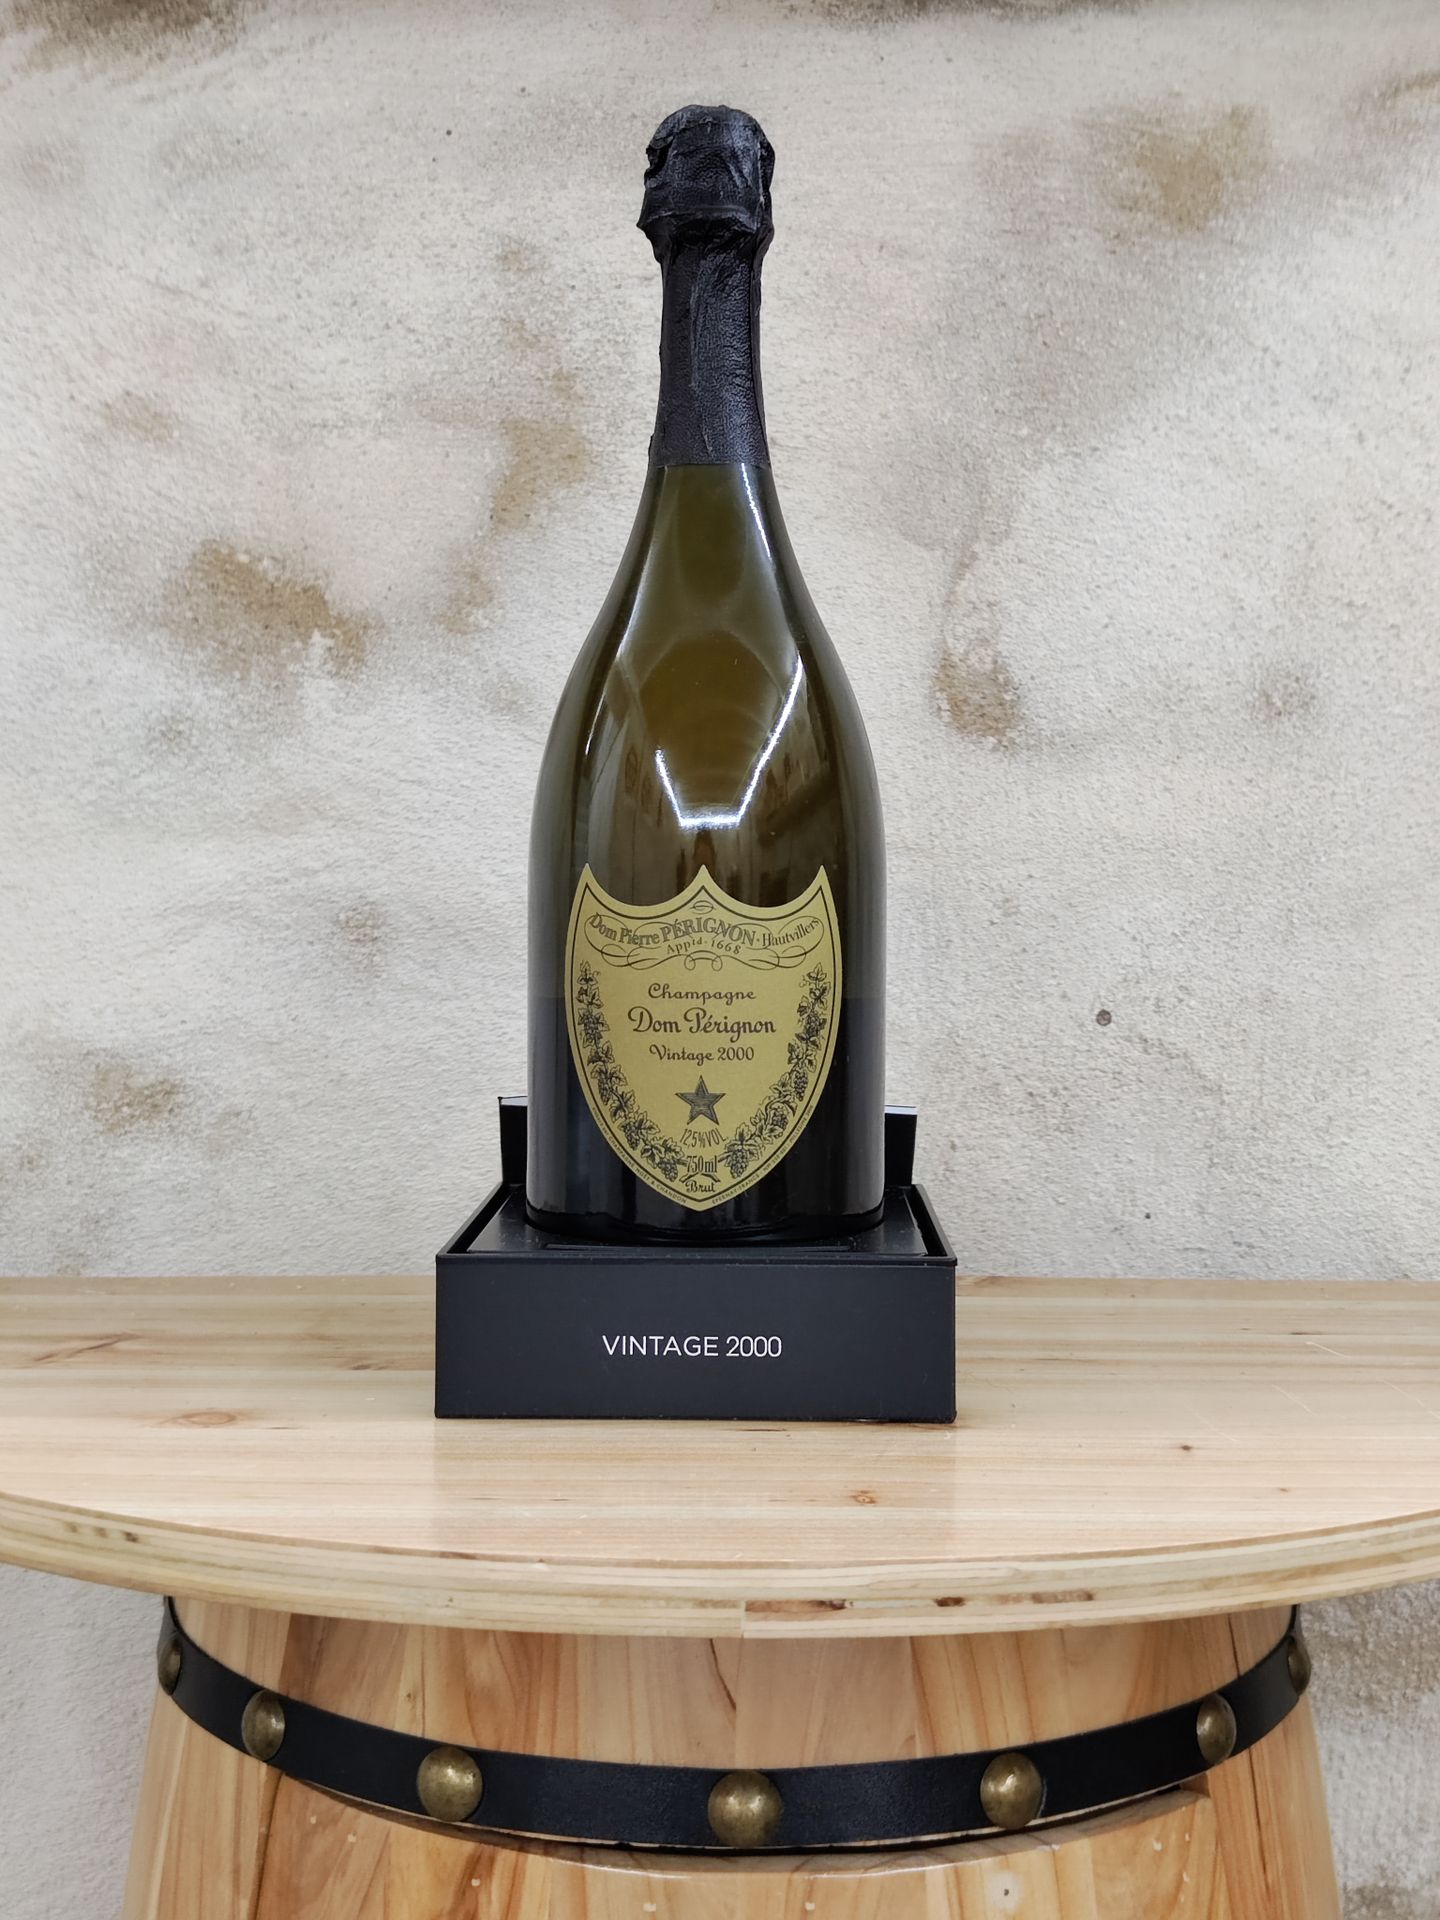 Null 1 bottle of DOM PERIGNON brut champagne, Vintage 2000.
In box.